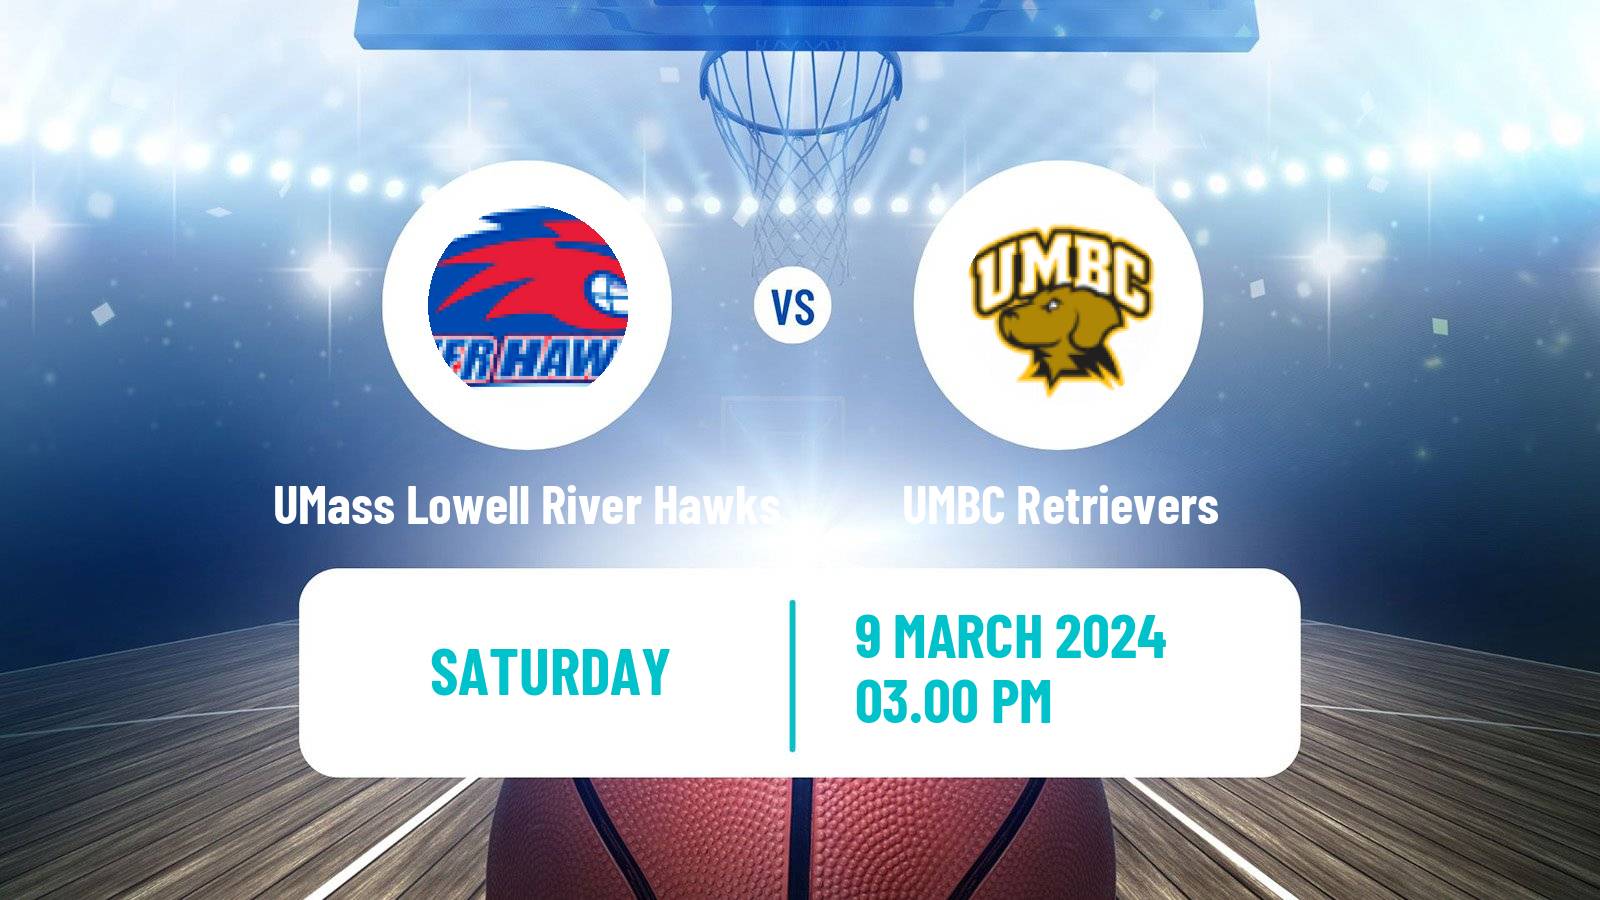 Basketball NCAA College Basketball UMass Lowell River Hawks - UMBC Retrievers